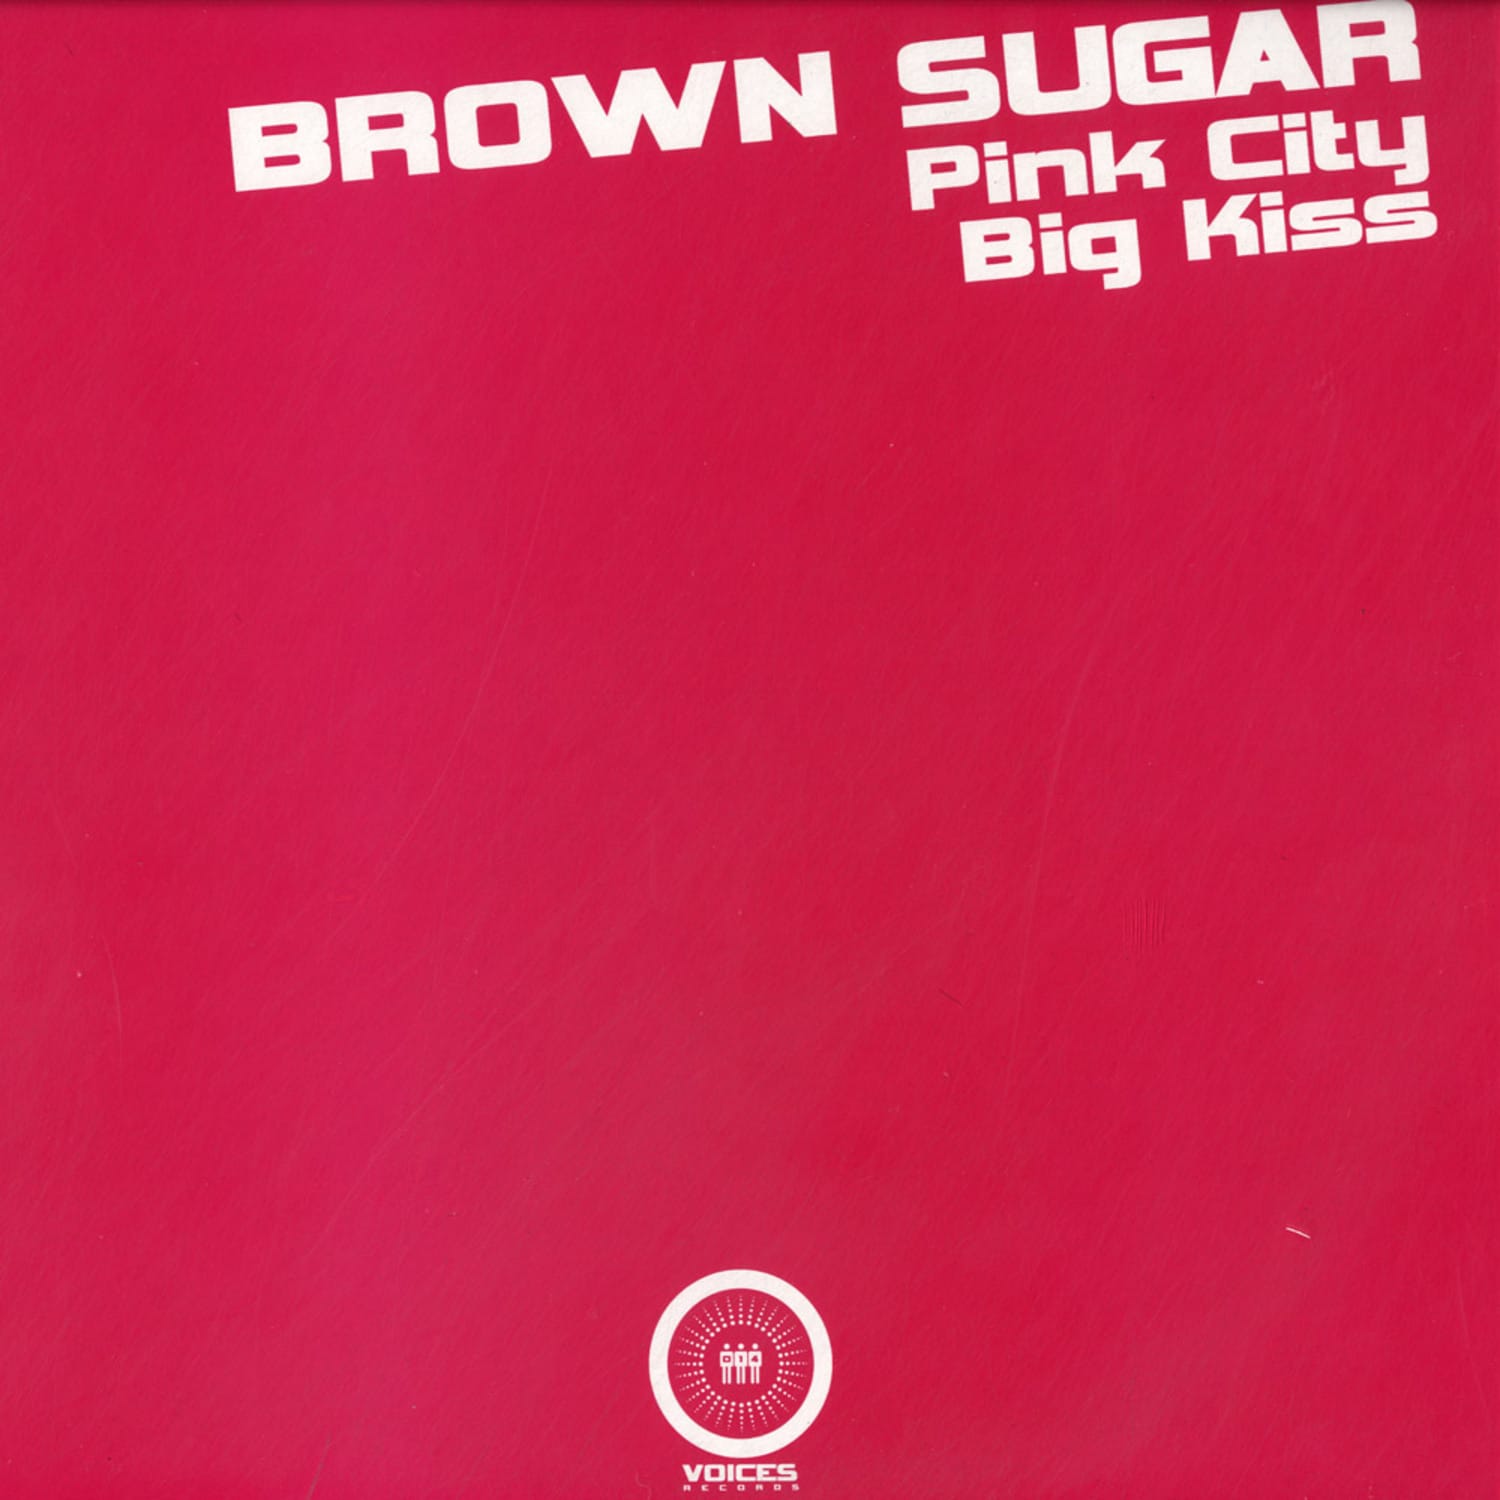 Brown Sugar - PINK CITY / BIG KISS